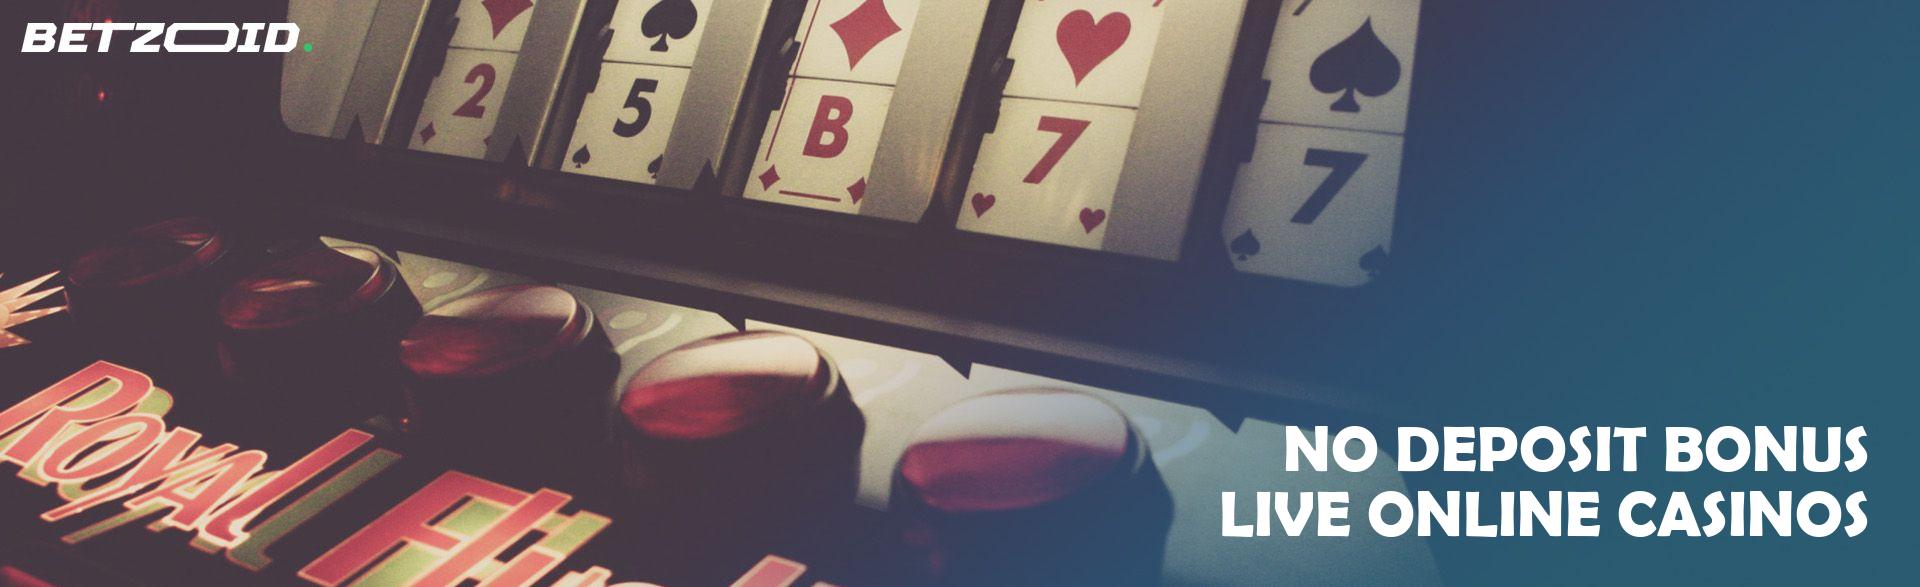 No Deposit Bonus Live Online Casinos.